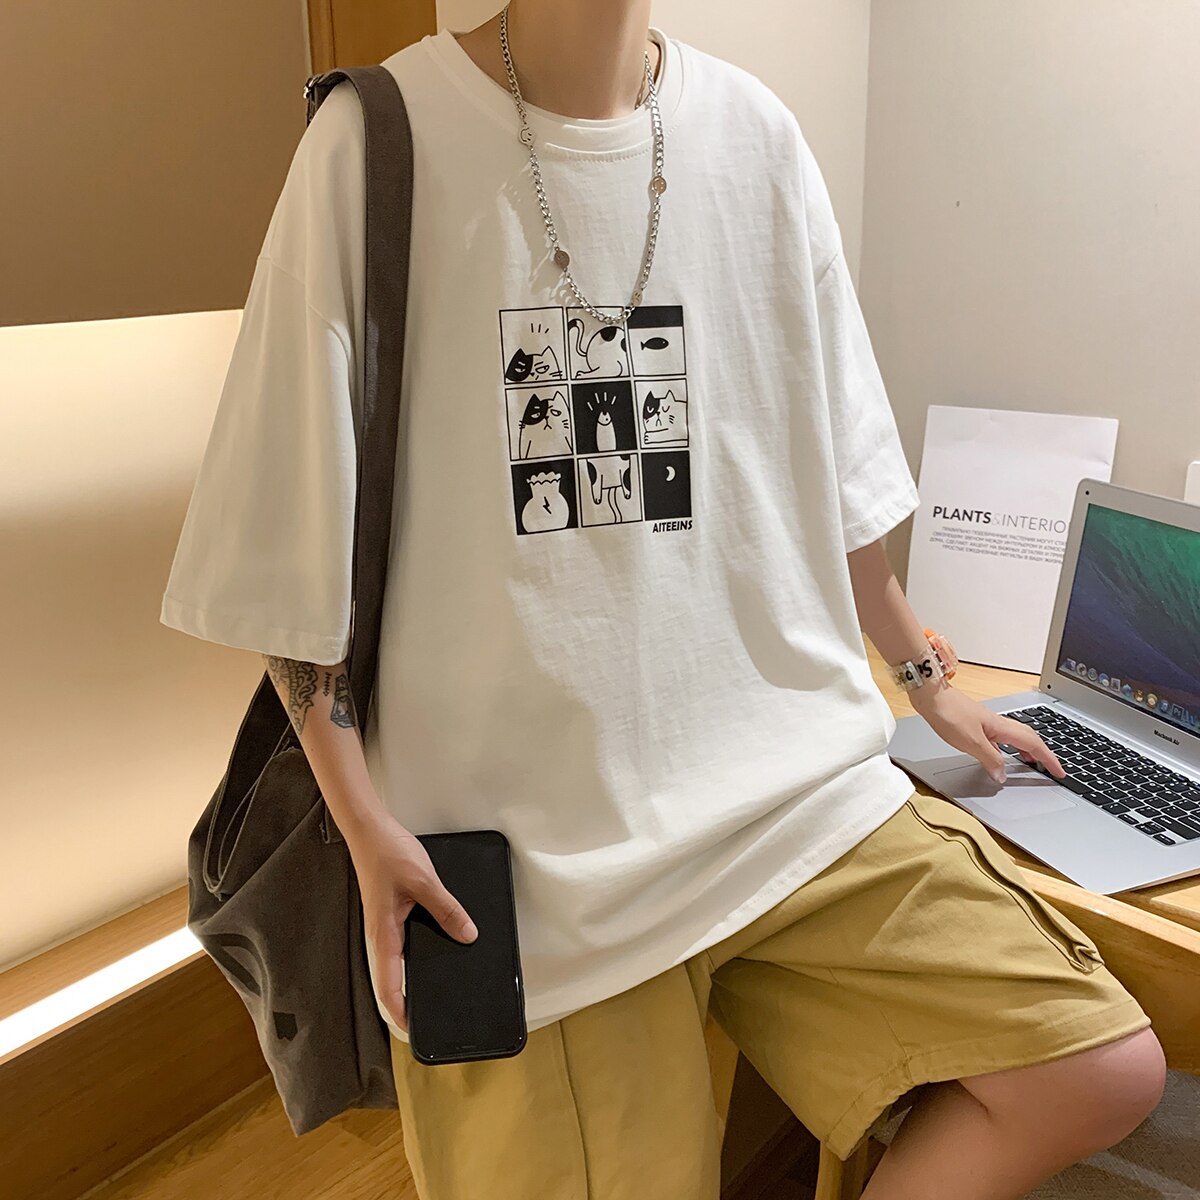 "Sqaure House" Unisex Men Women Streetwear Graphic T-Shirt Daulet Apparel